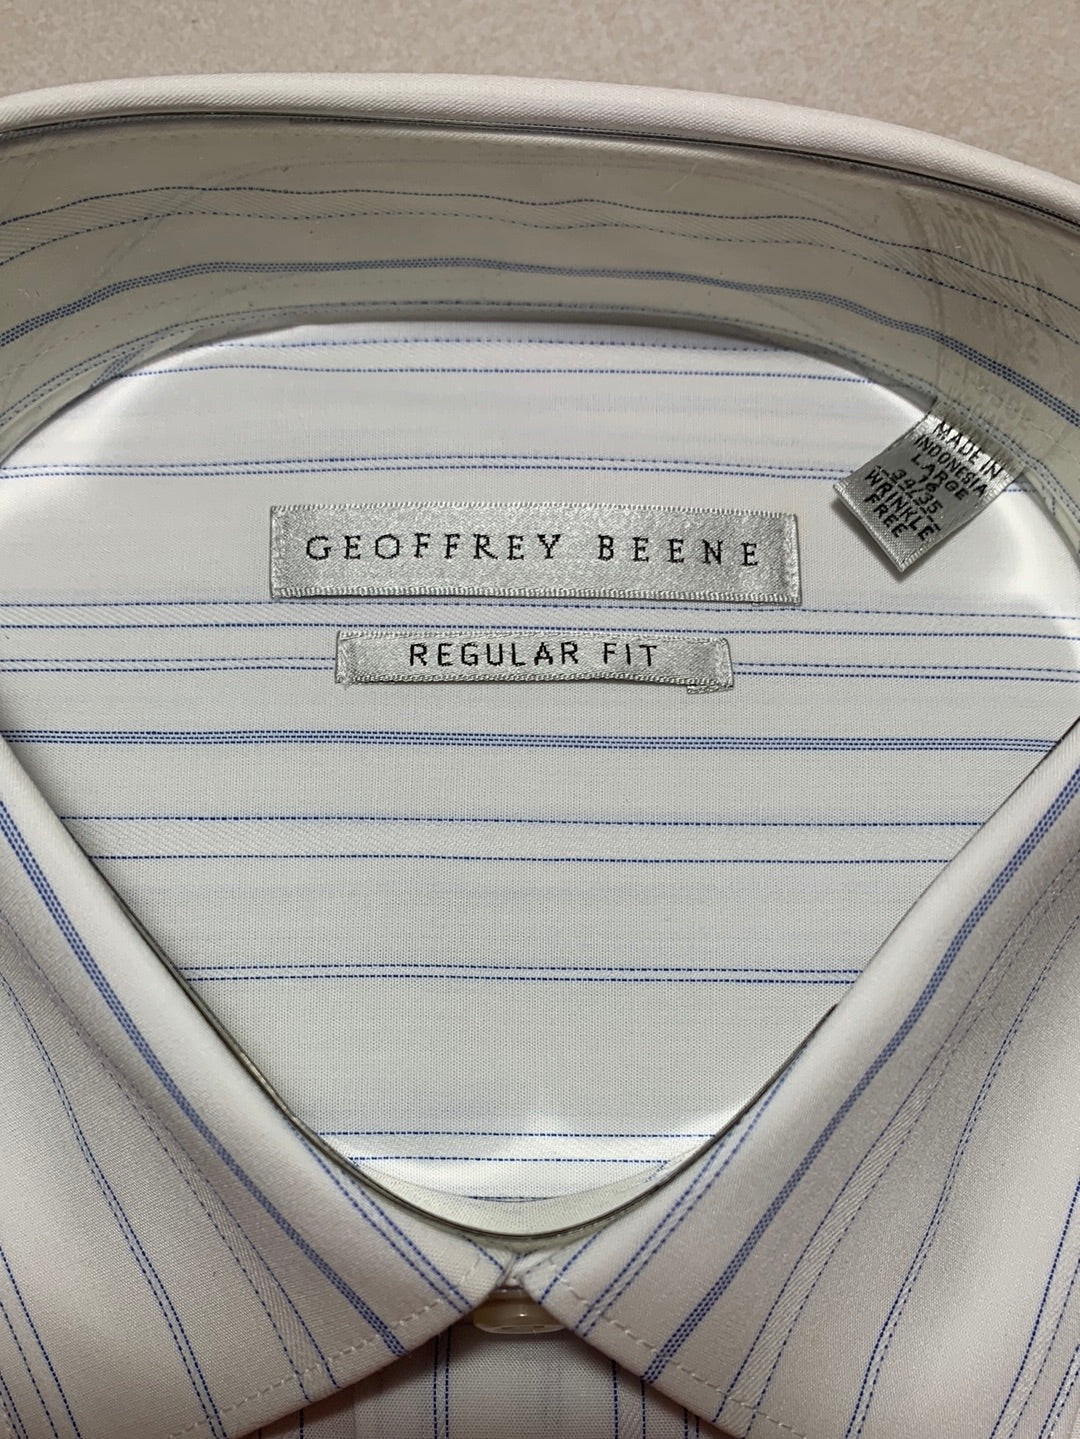 NEW - GEOFFREY BEENE white blue stripe Wrinkle Free Regular Fit Shirt - 16 34-35 Large